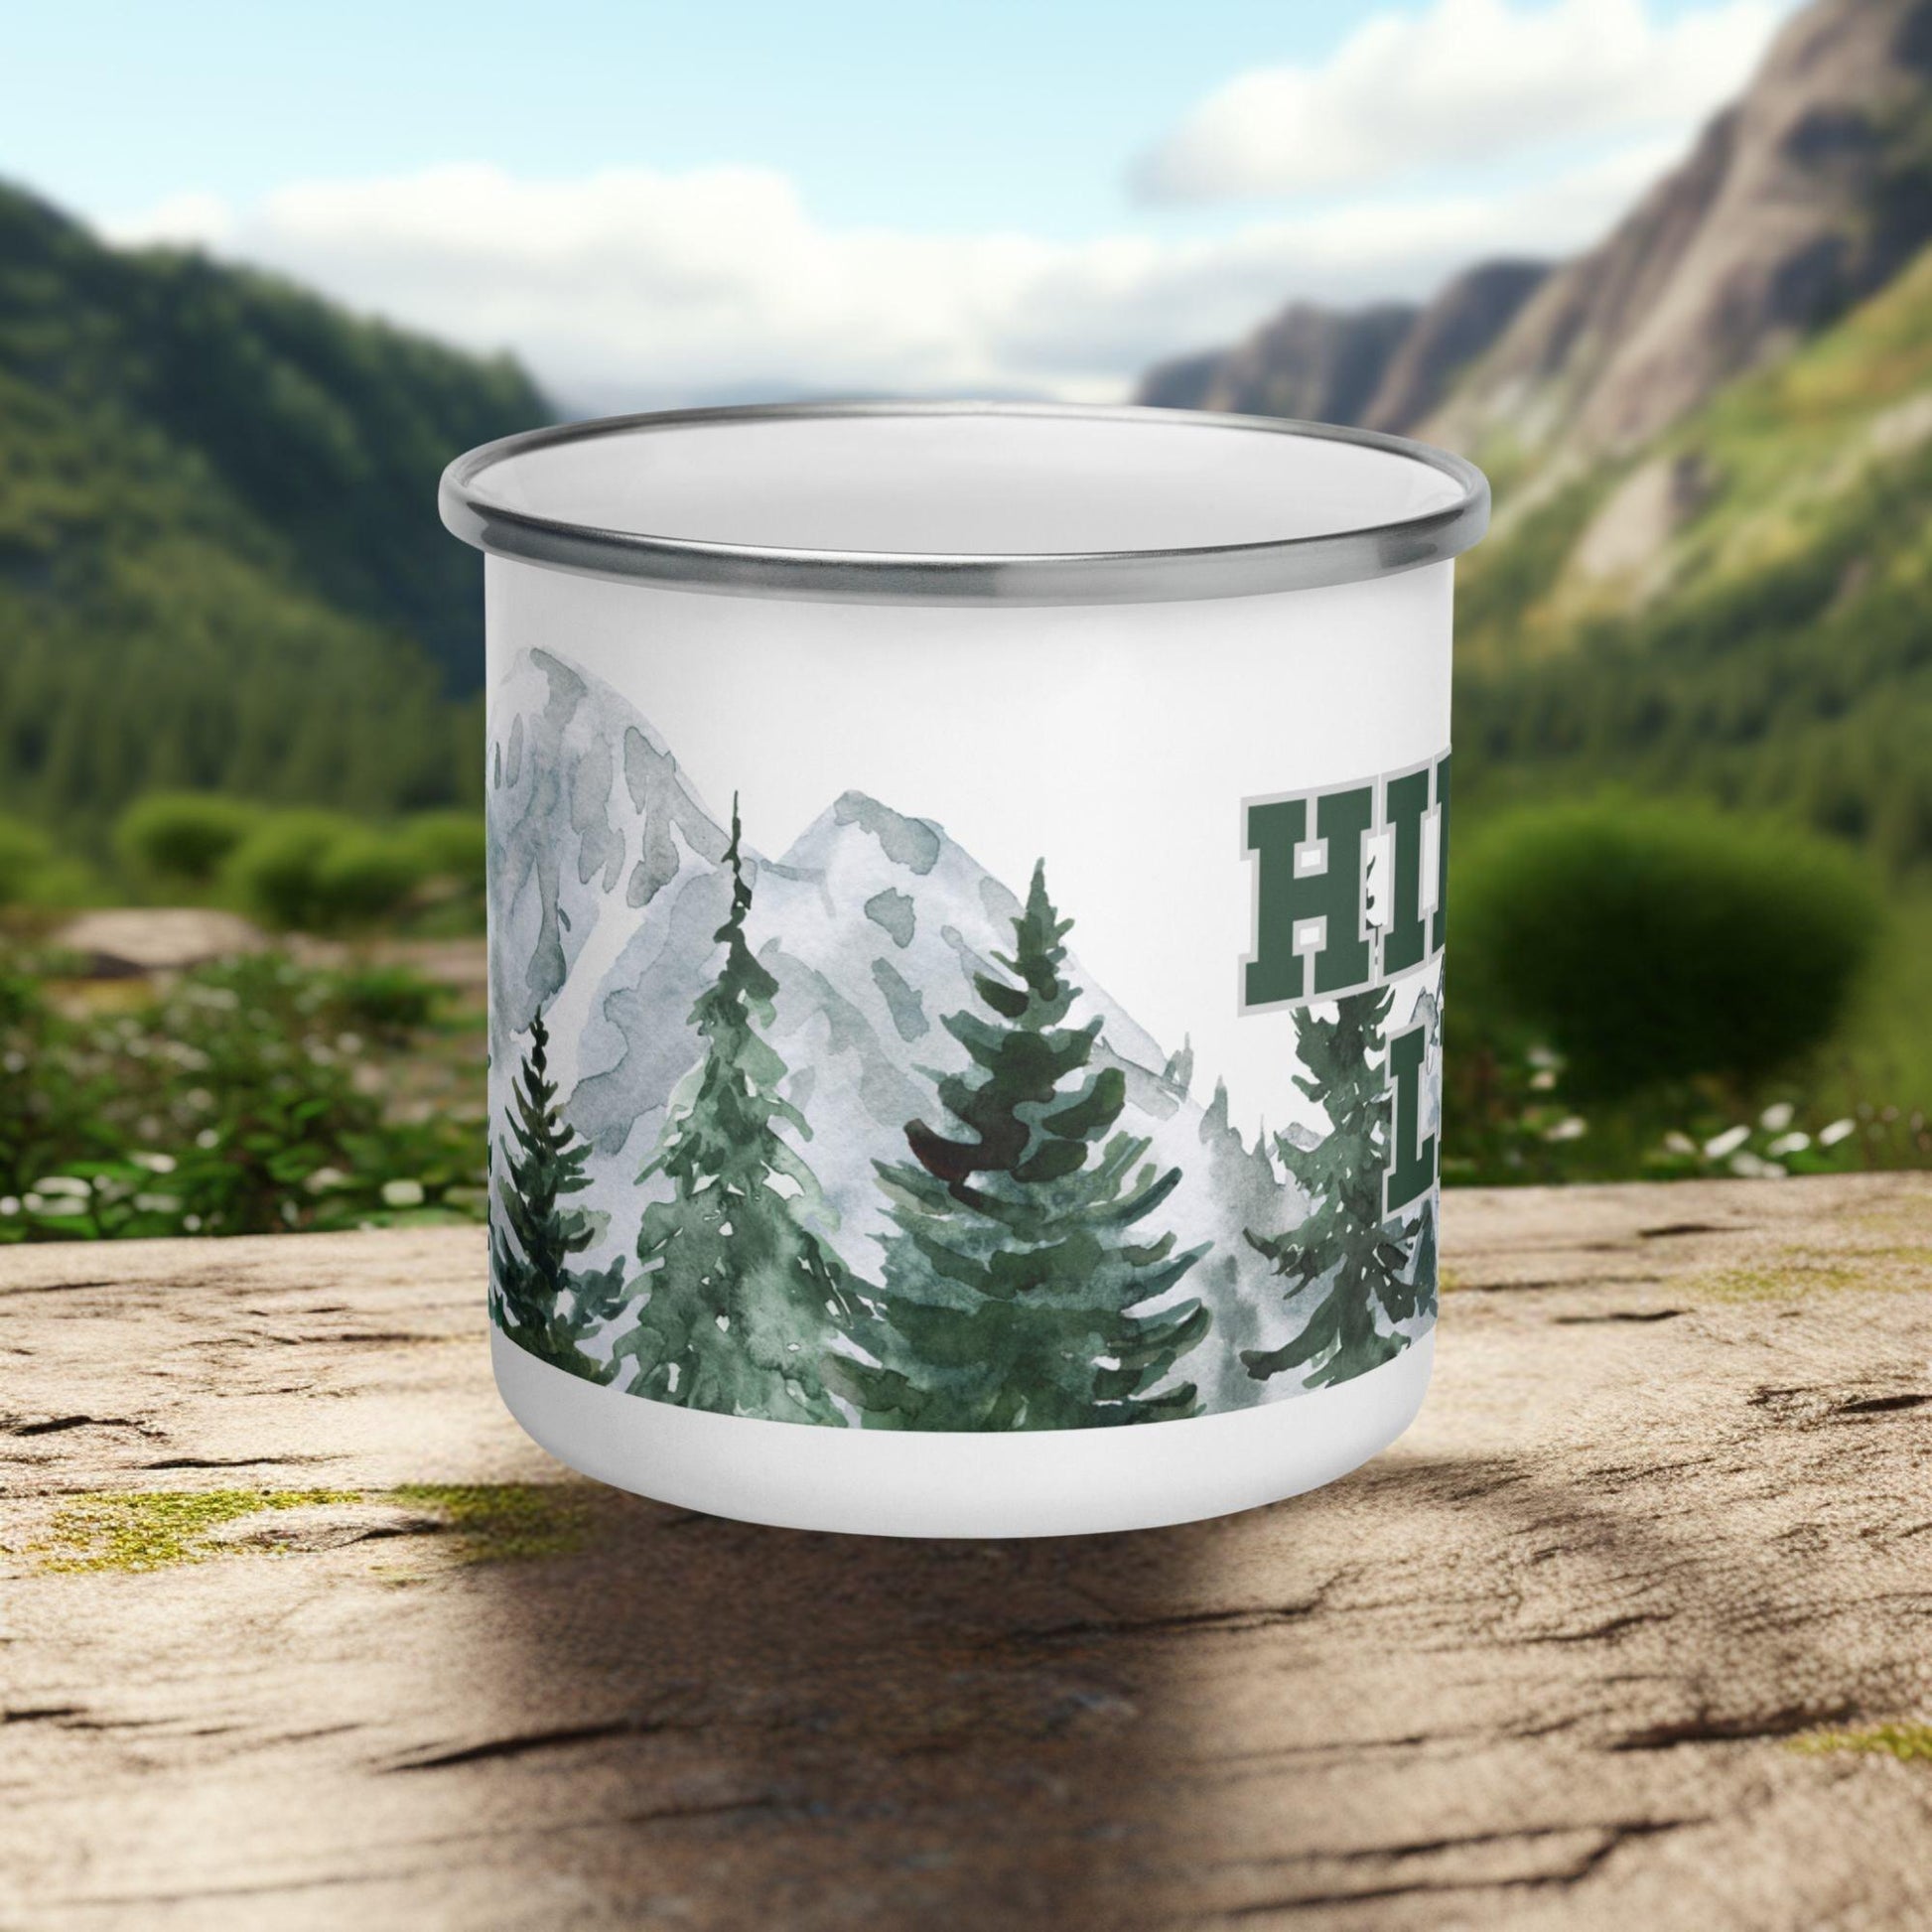 Hiking Life Enamel Mug - Adventure Threads Company